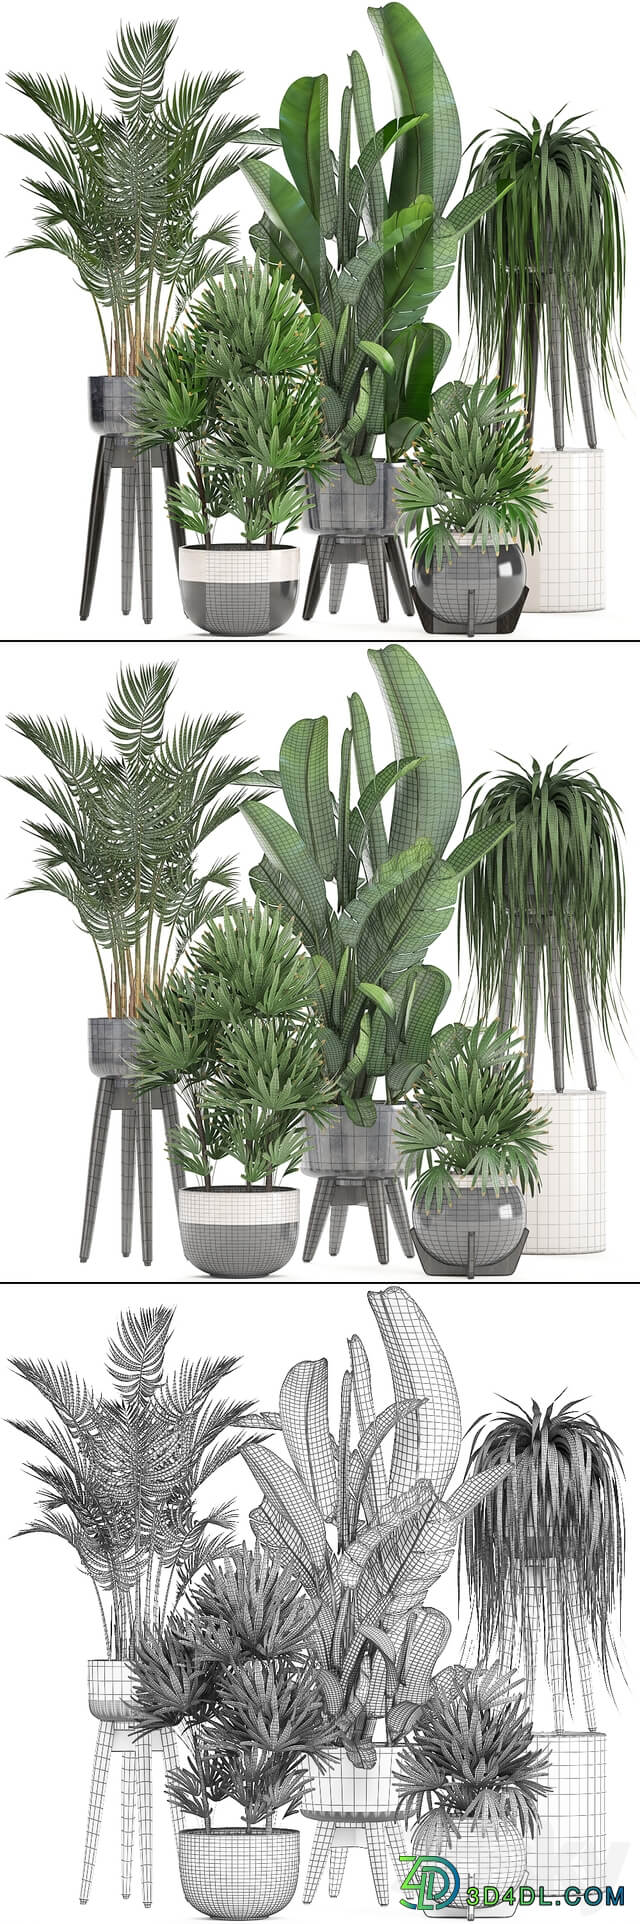 Collection of plants. Indoor plants rapis palm tree banana pot strelitzia indoor plants 3D Models